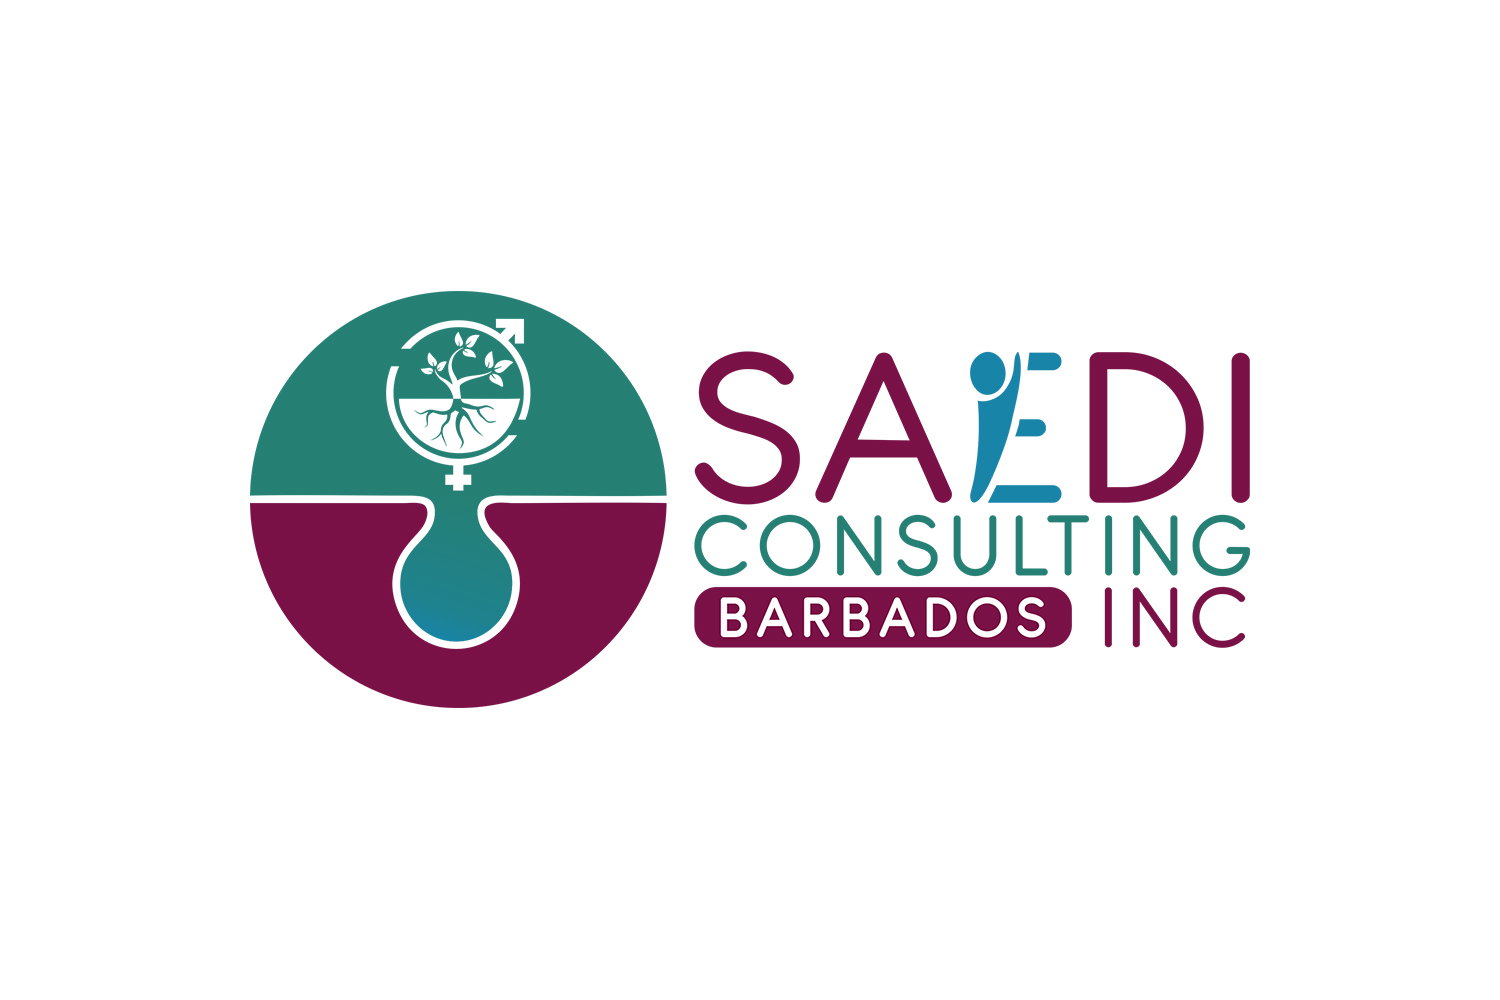 SAEDI Consulting Barbados Inc - Sara Lavell